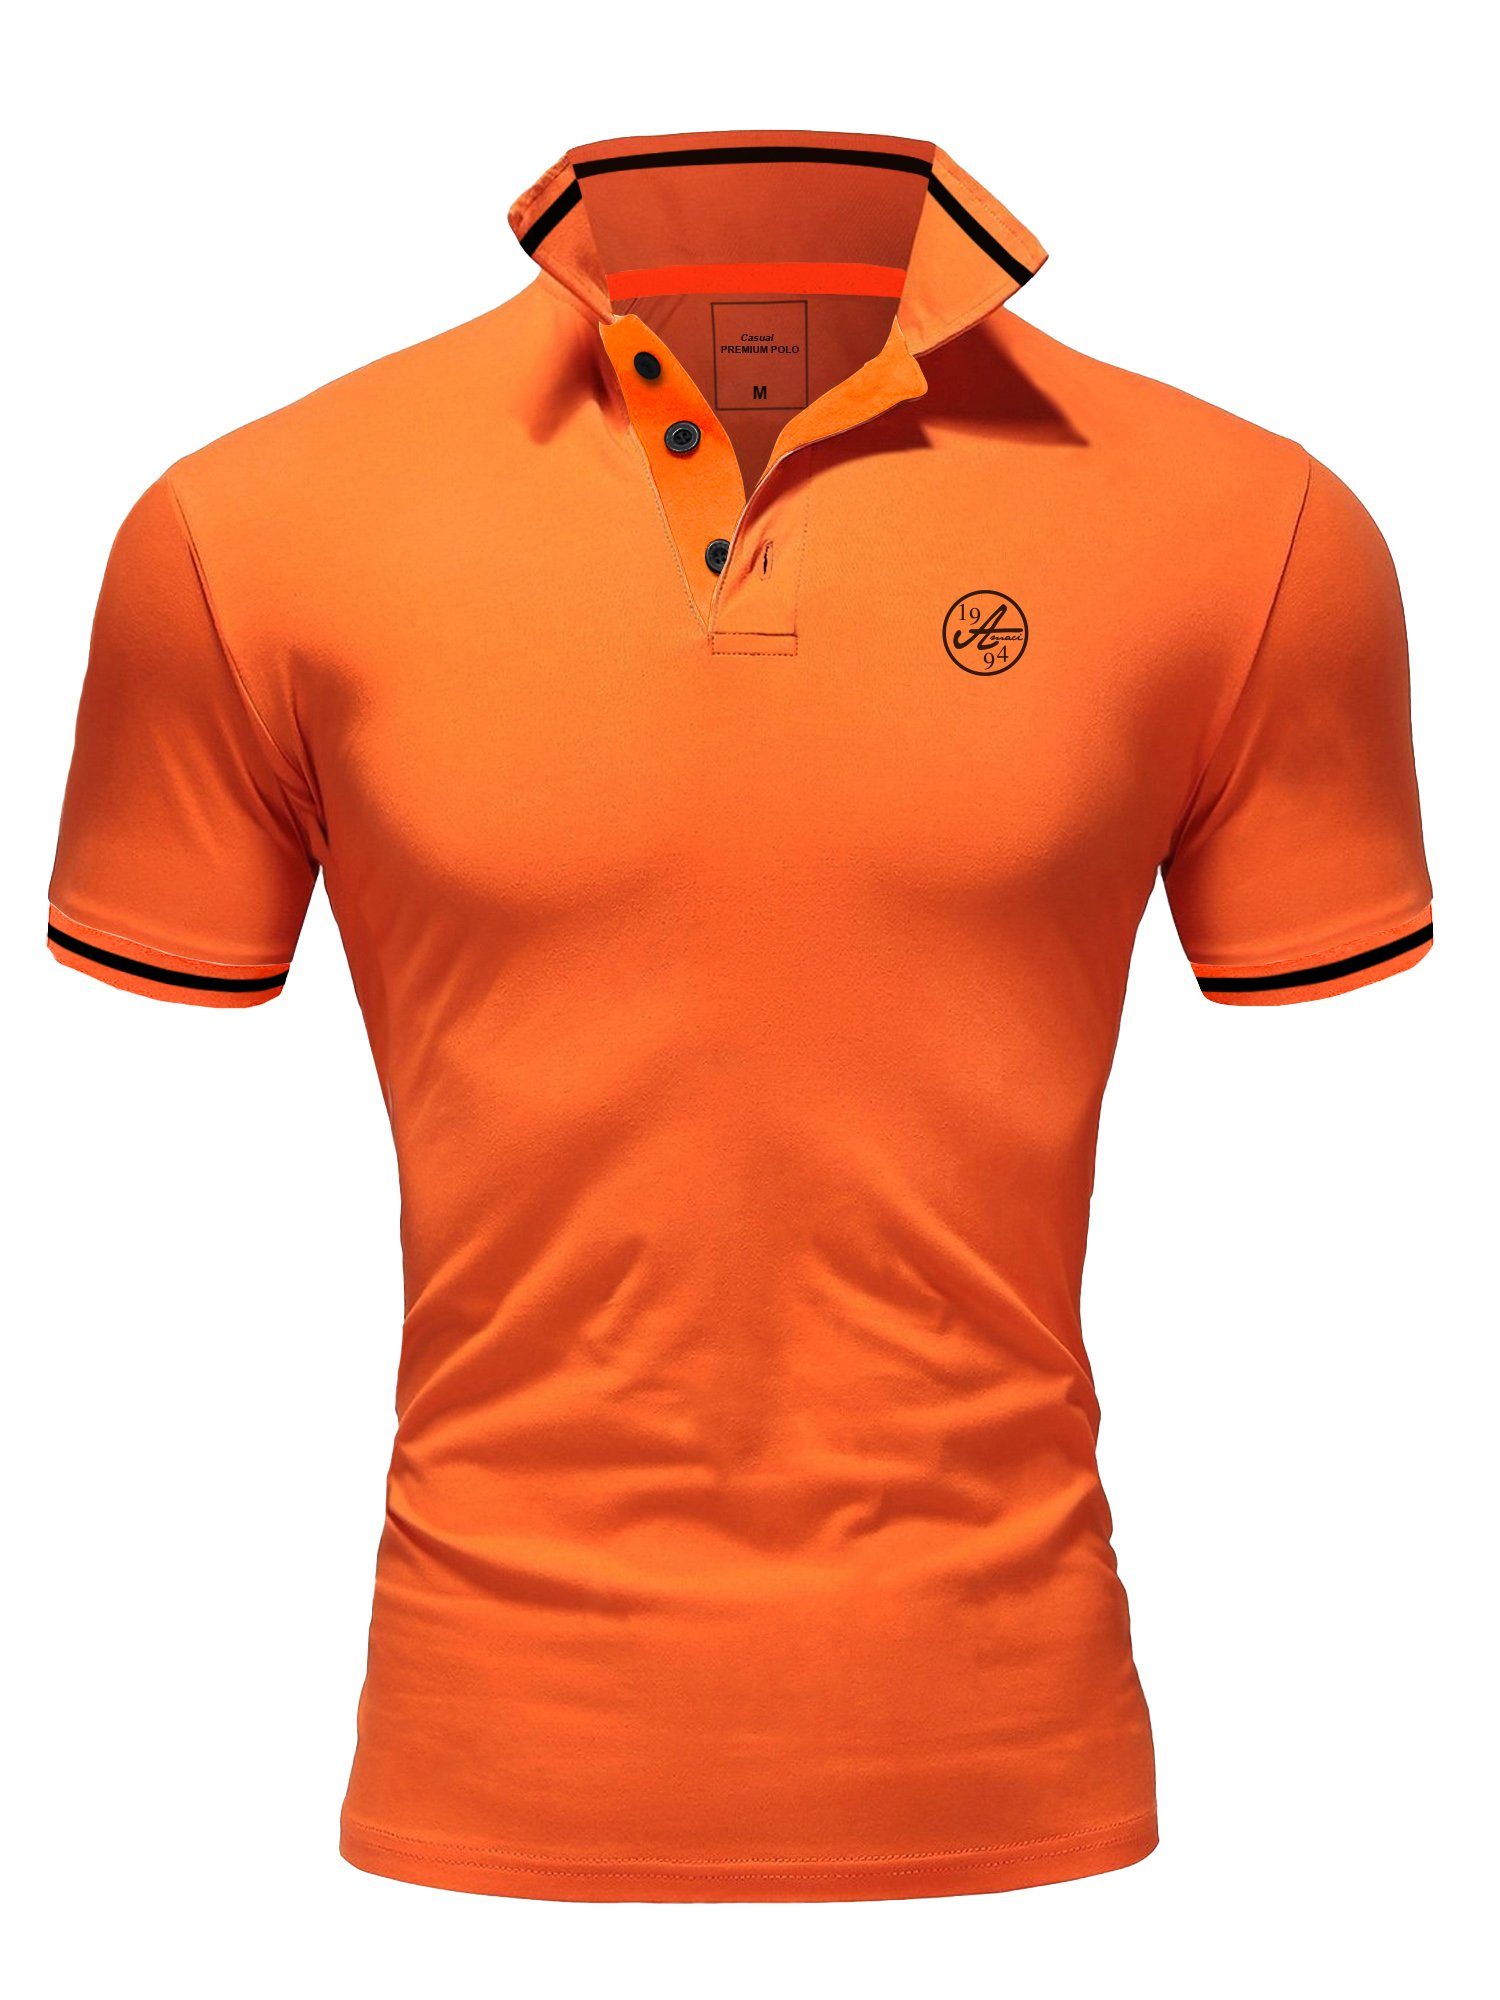 Amaci&Sons Poloshirt MACON Herren Basic Kontrast Stickerei Kurzarm Polohemd T-Shirt Orange/Schwarz